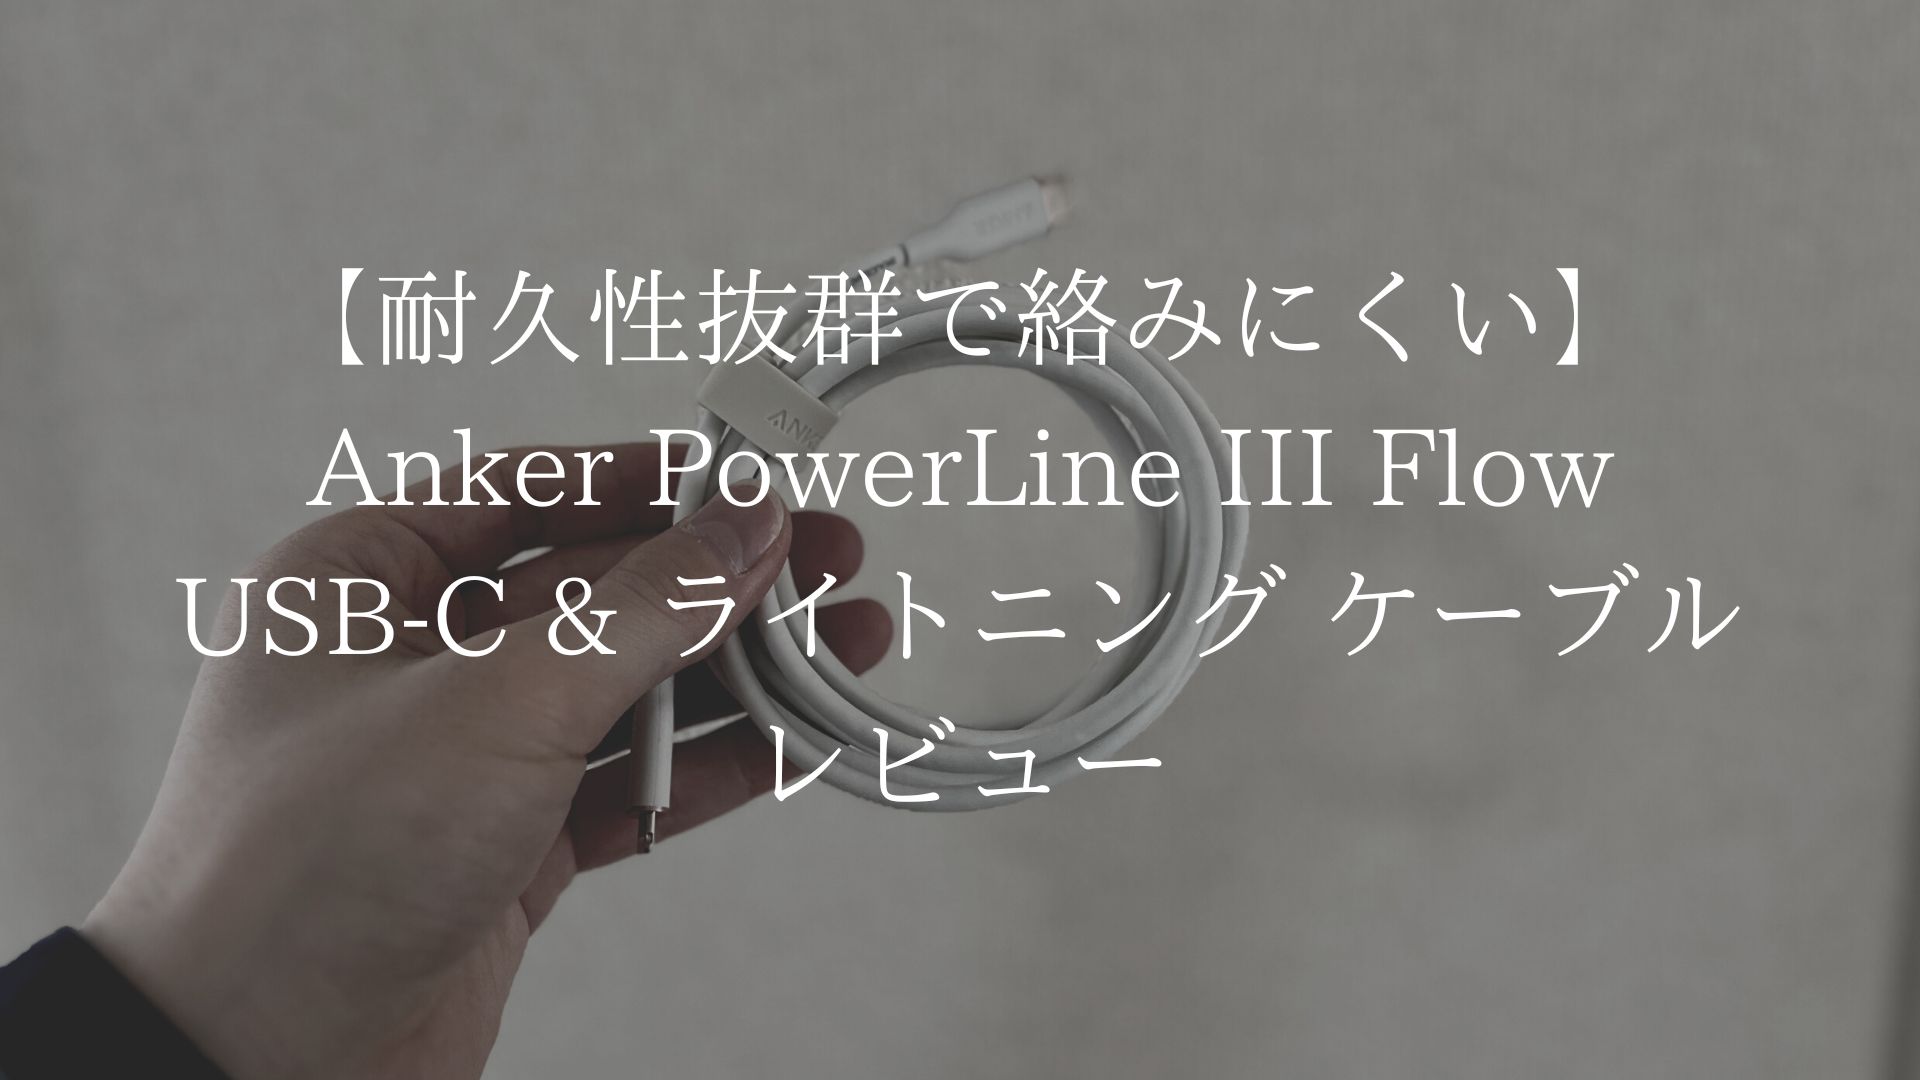 Anker PowerLine III Flow USB-C & ライトニング ケーブルのアイキャッチ画像